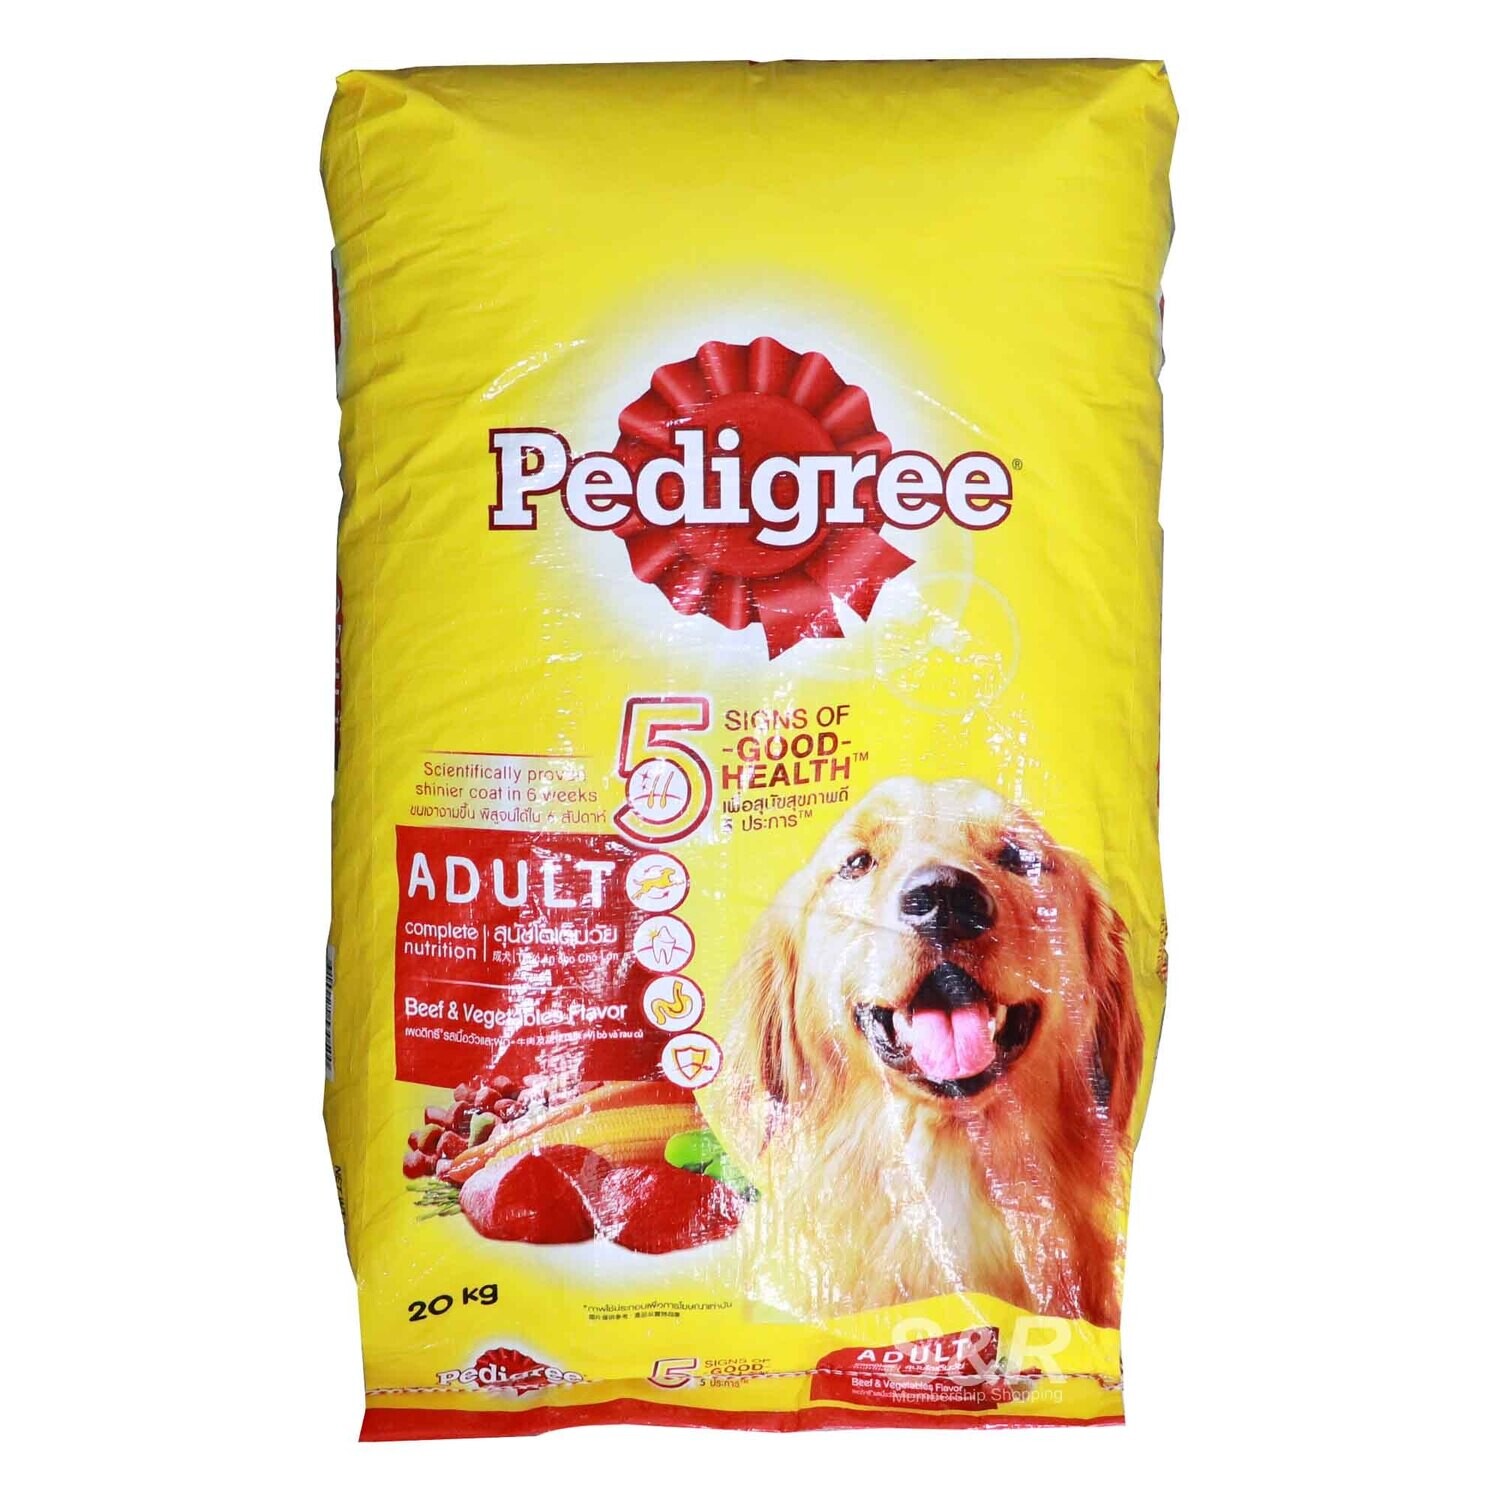 Pedigree Beef & Vegetable Flavor 20kg - dry dog food